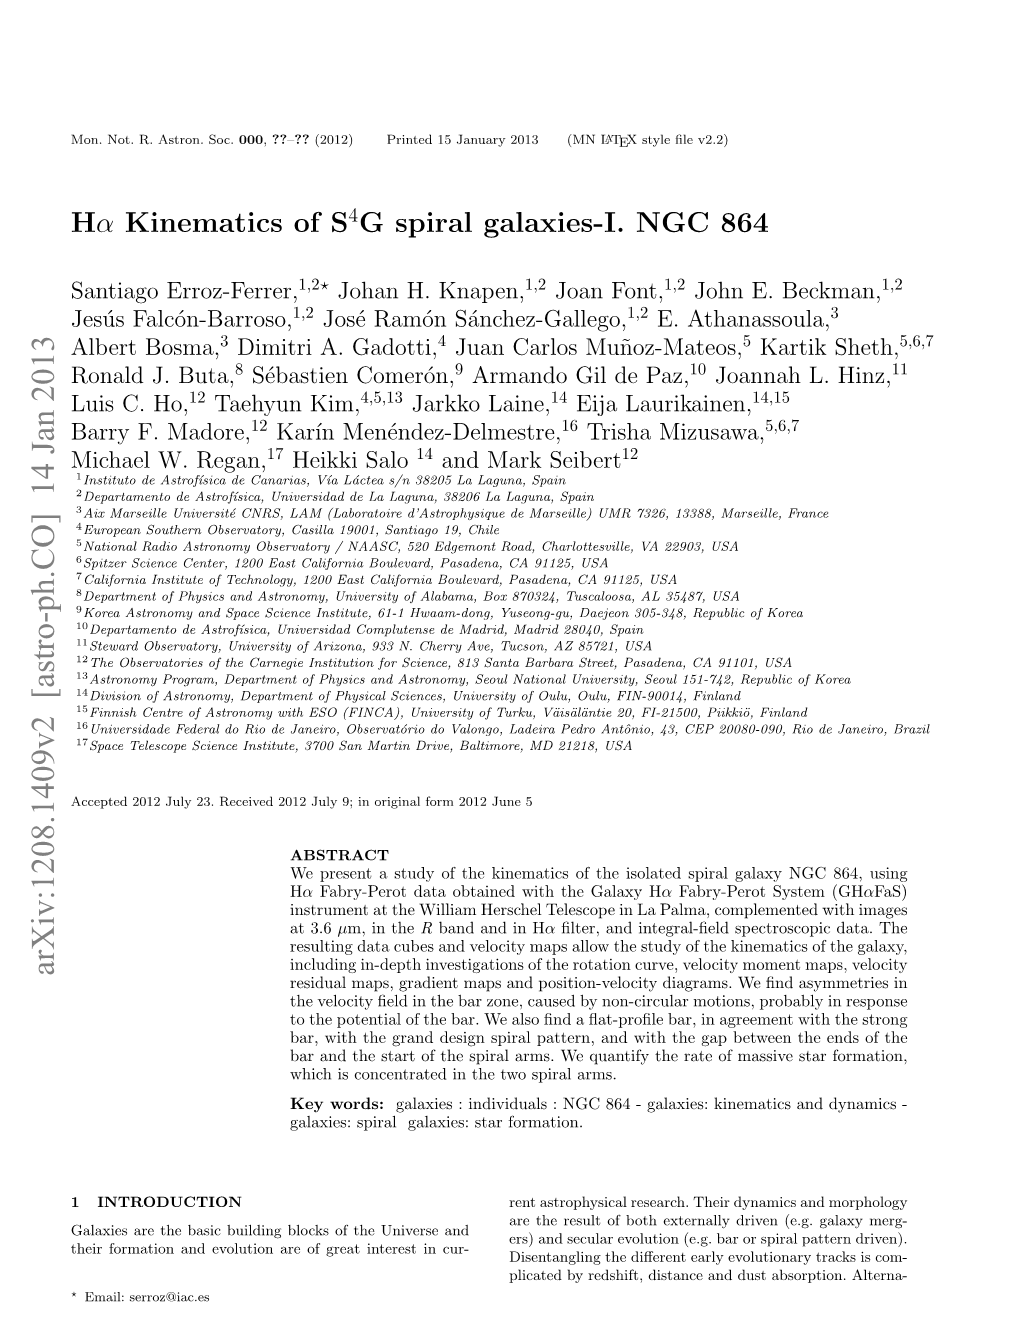 Hα Kinematics of S^(4) G Spiral Galaxies-I. NGC